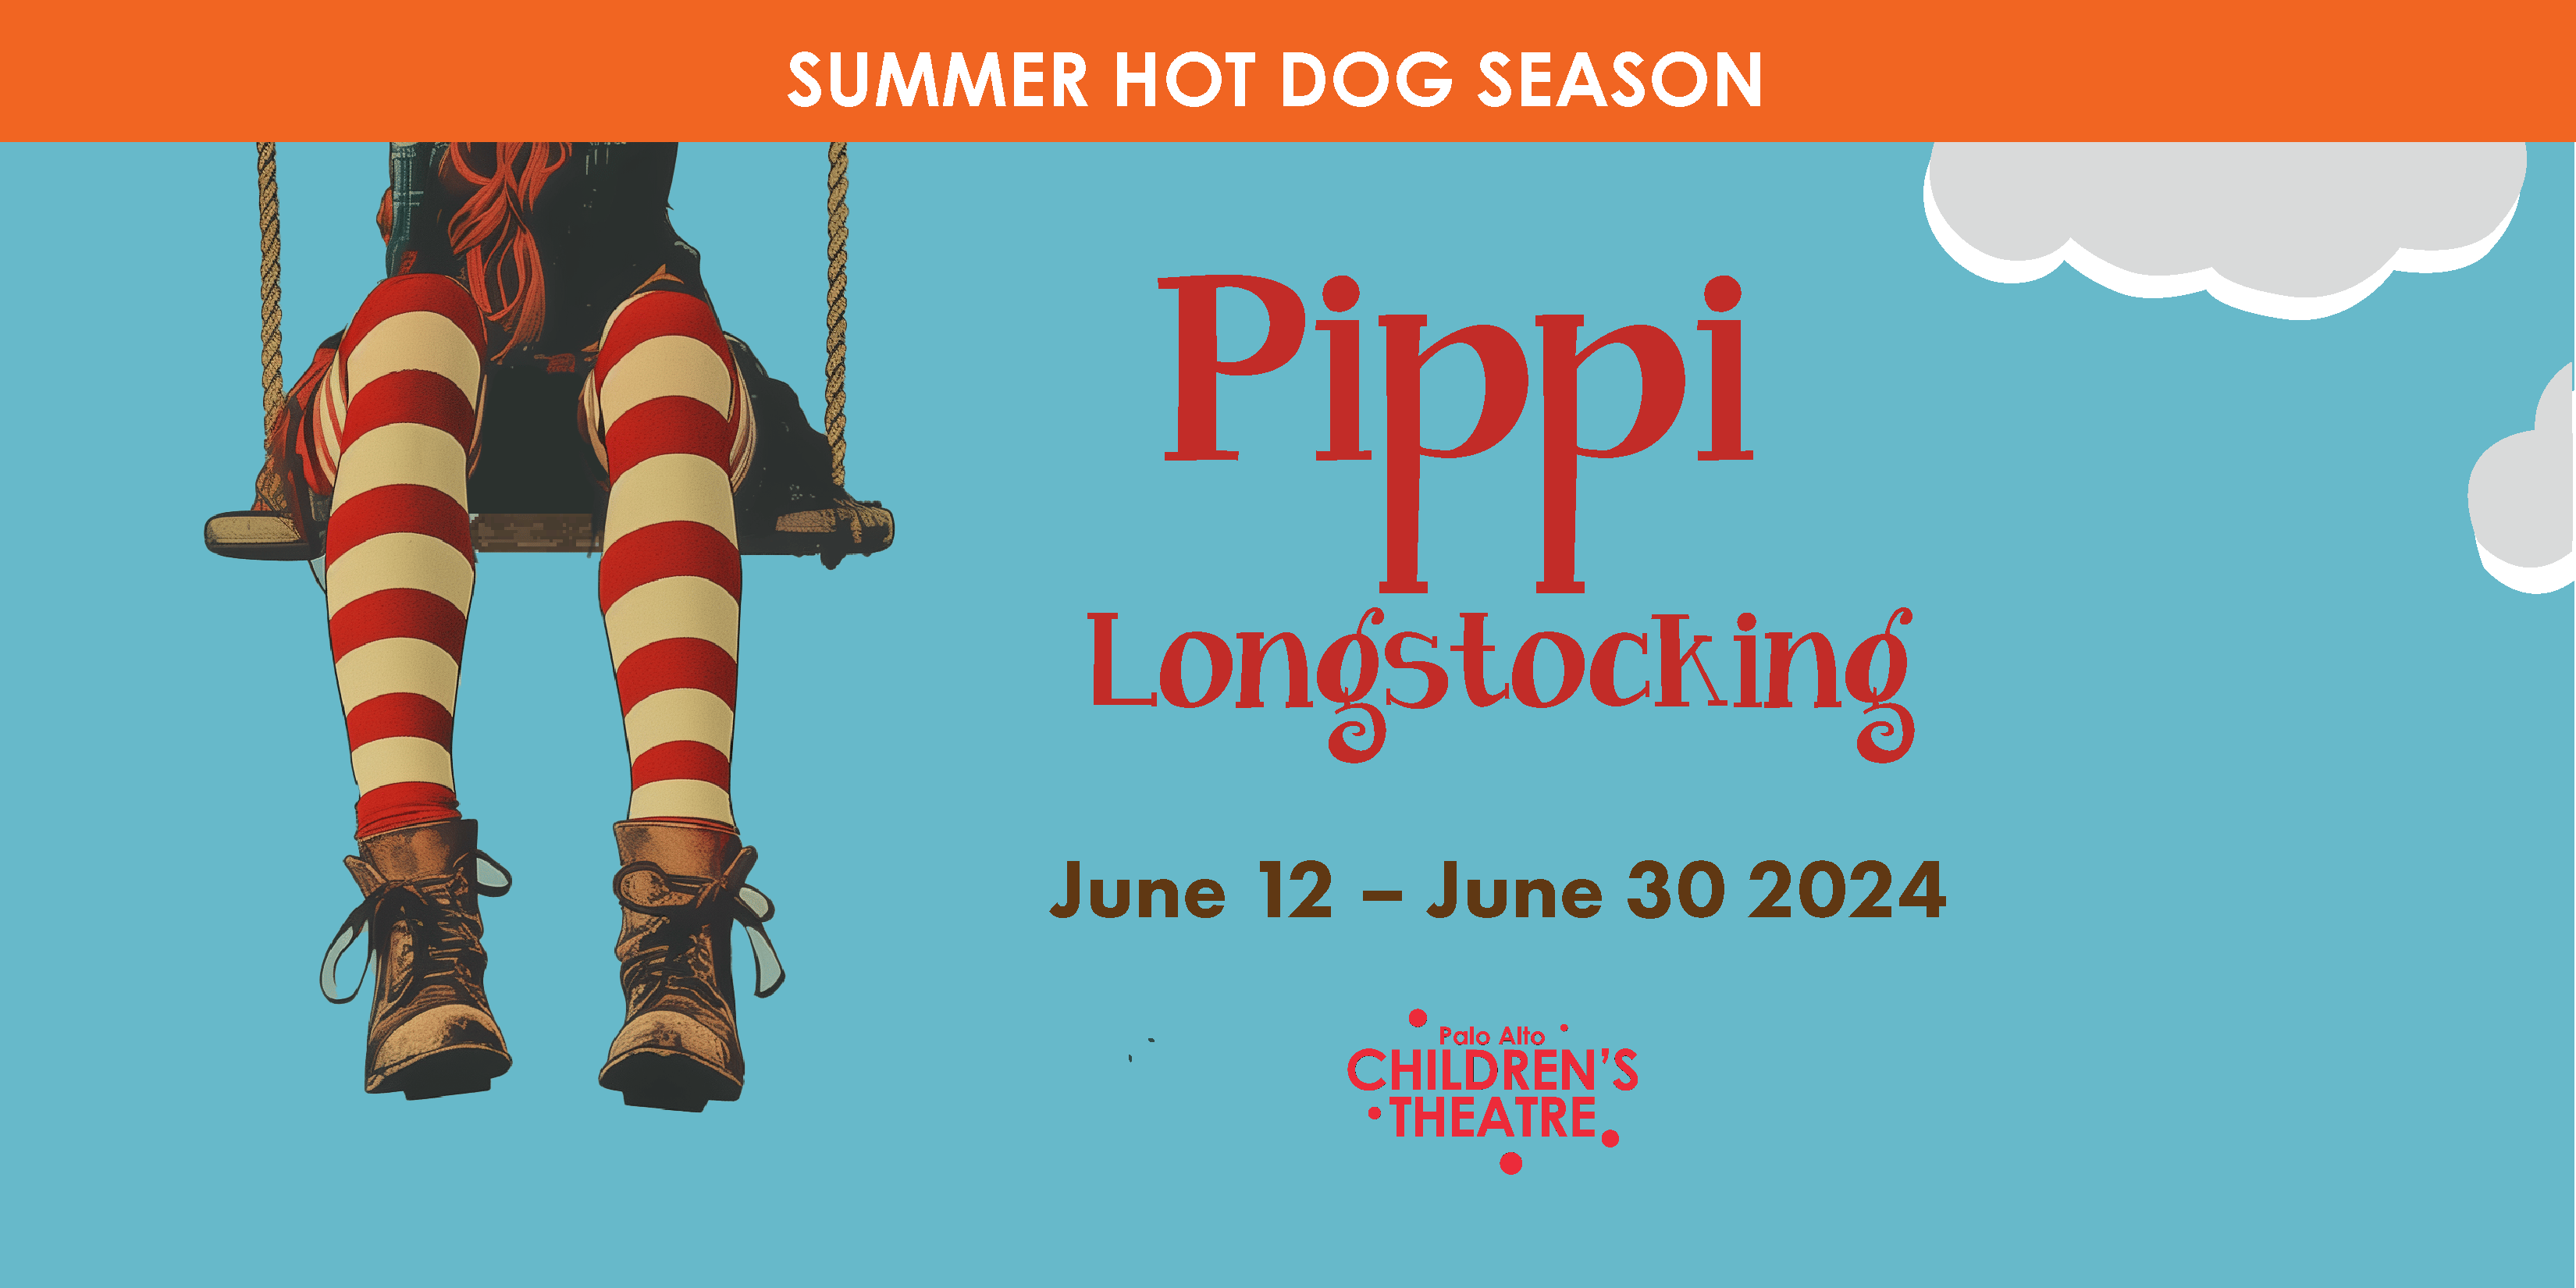 Palo Alto Children's Theater presents Pippi Longstocking